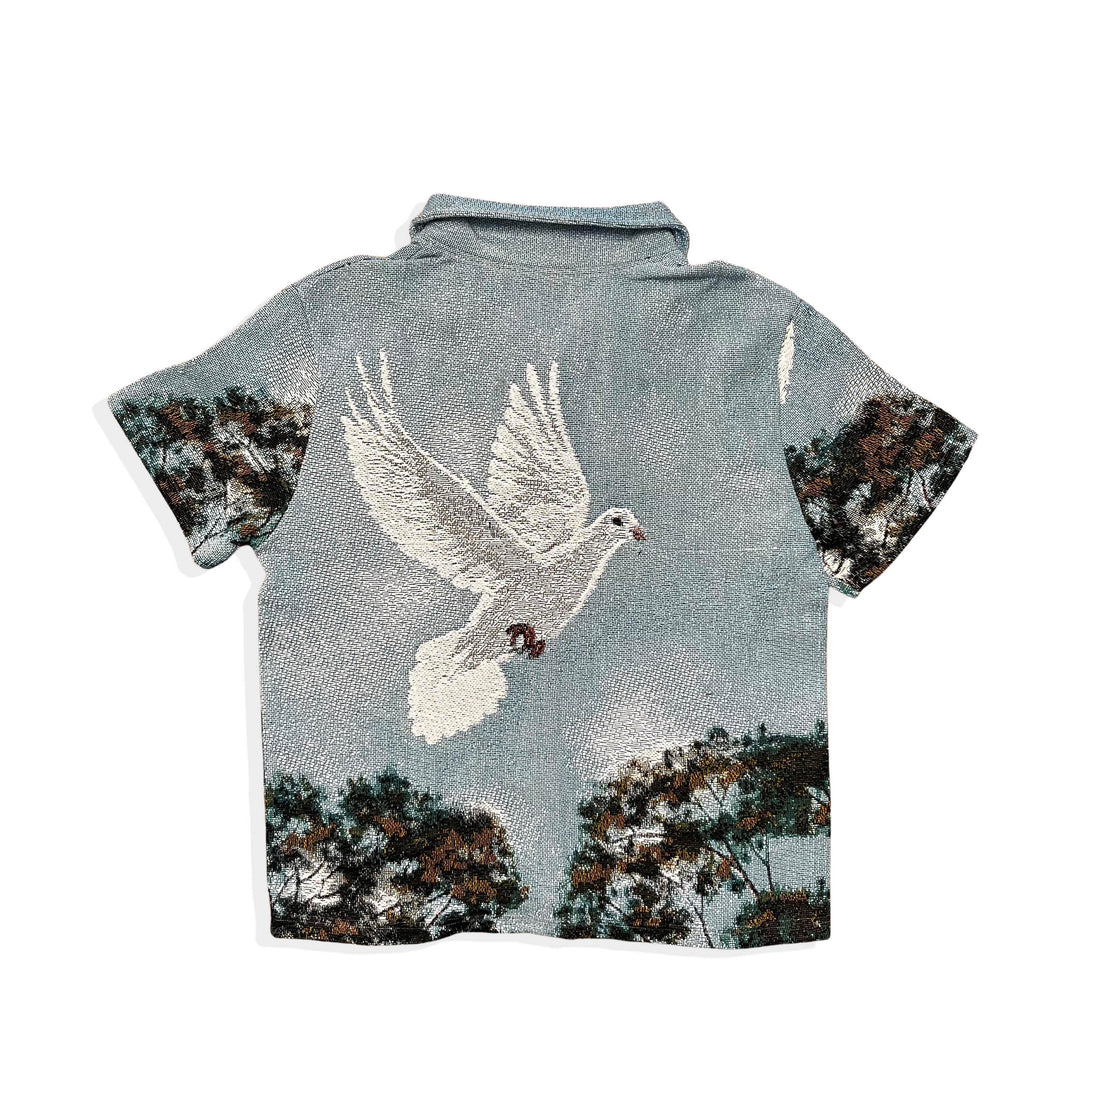 'Dove' Button Up Shirt